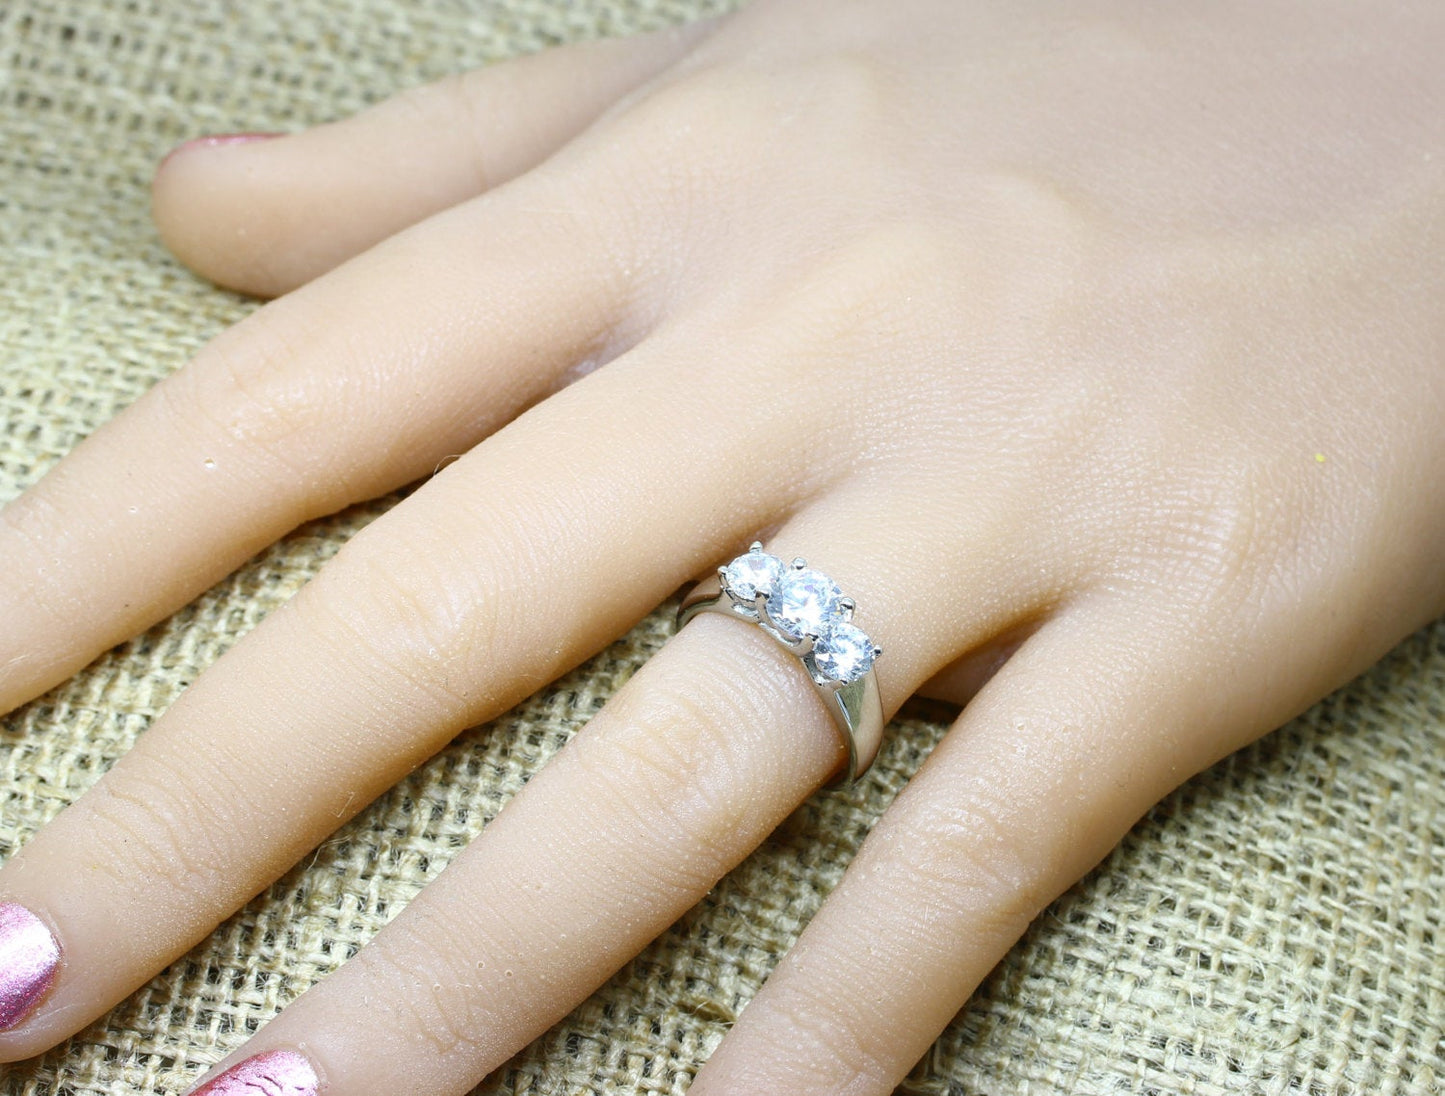 White Sapphire 3 stone trellis trilogy ring in titanium or white gold - engagement ring